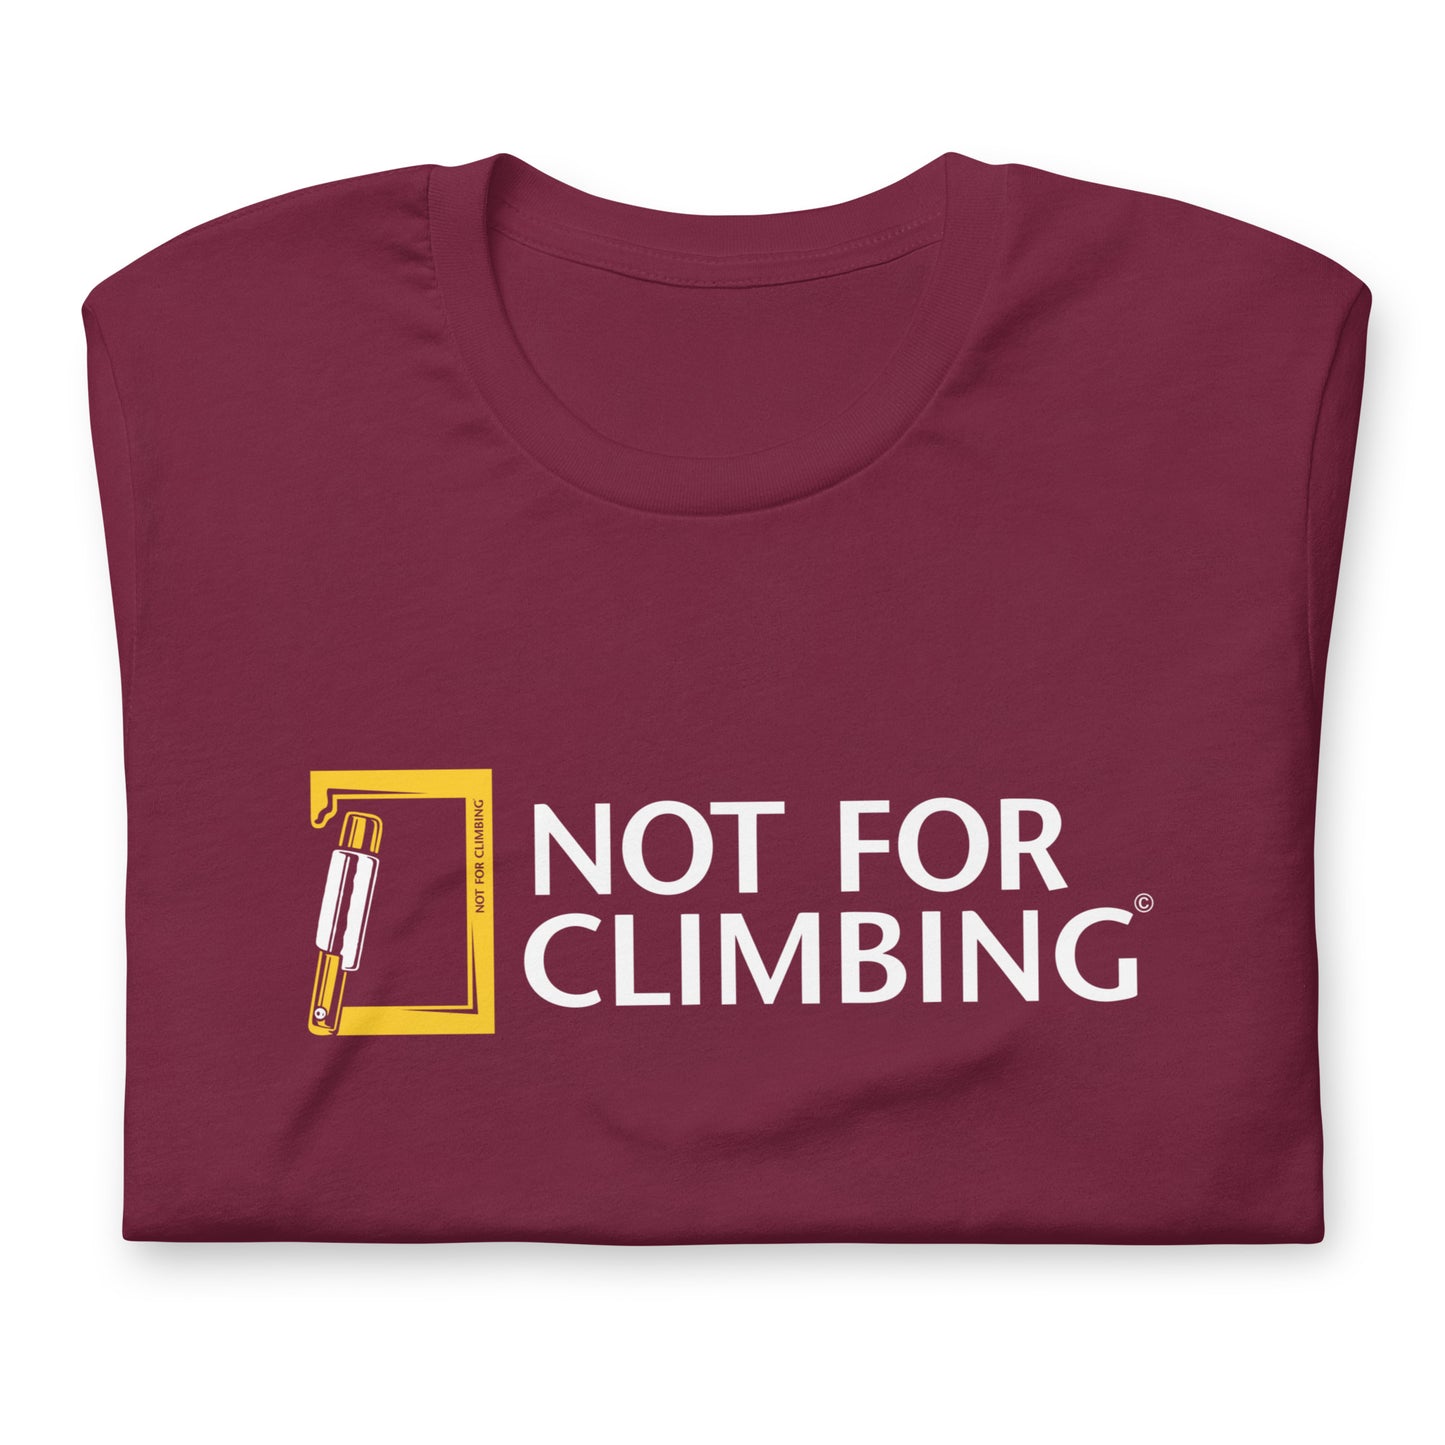 Camiseta "NOT FOR CLIMBING"